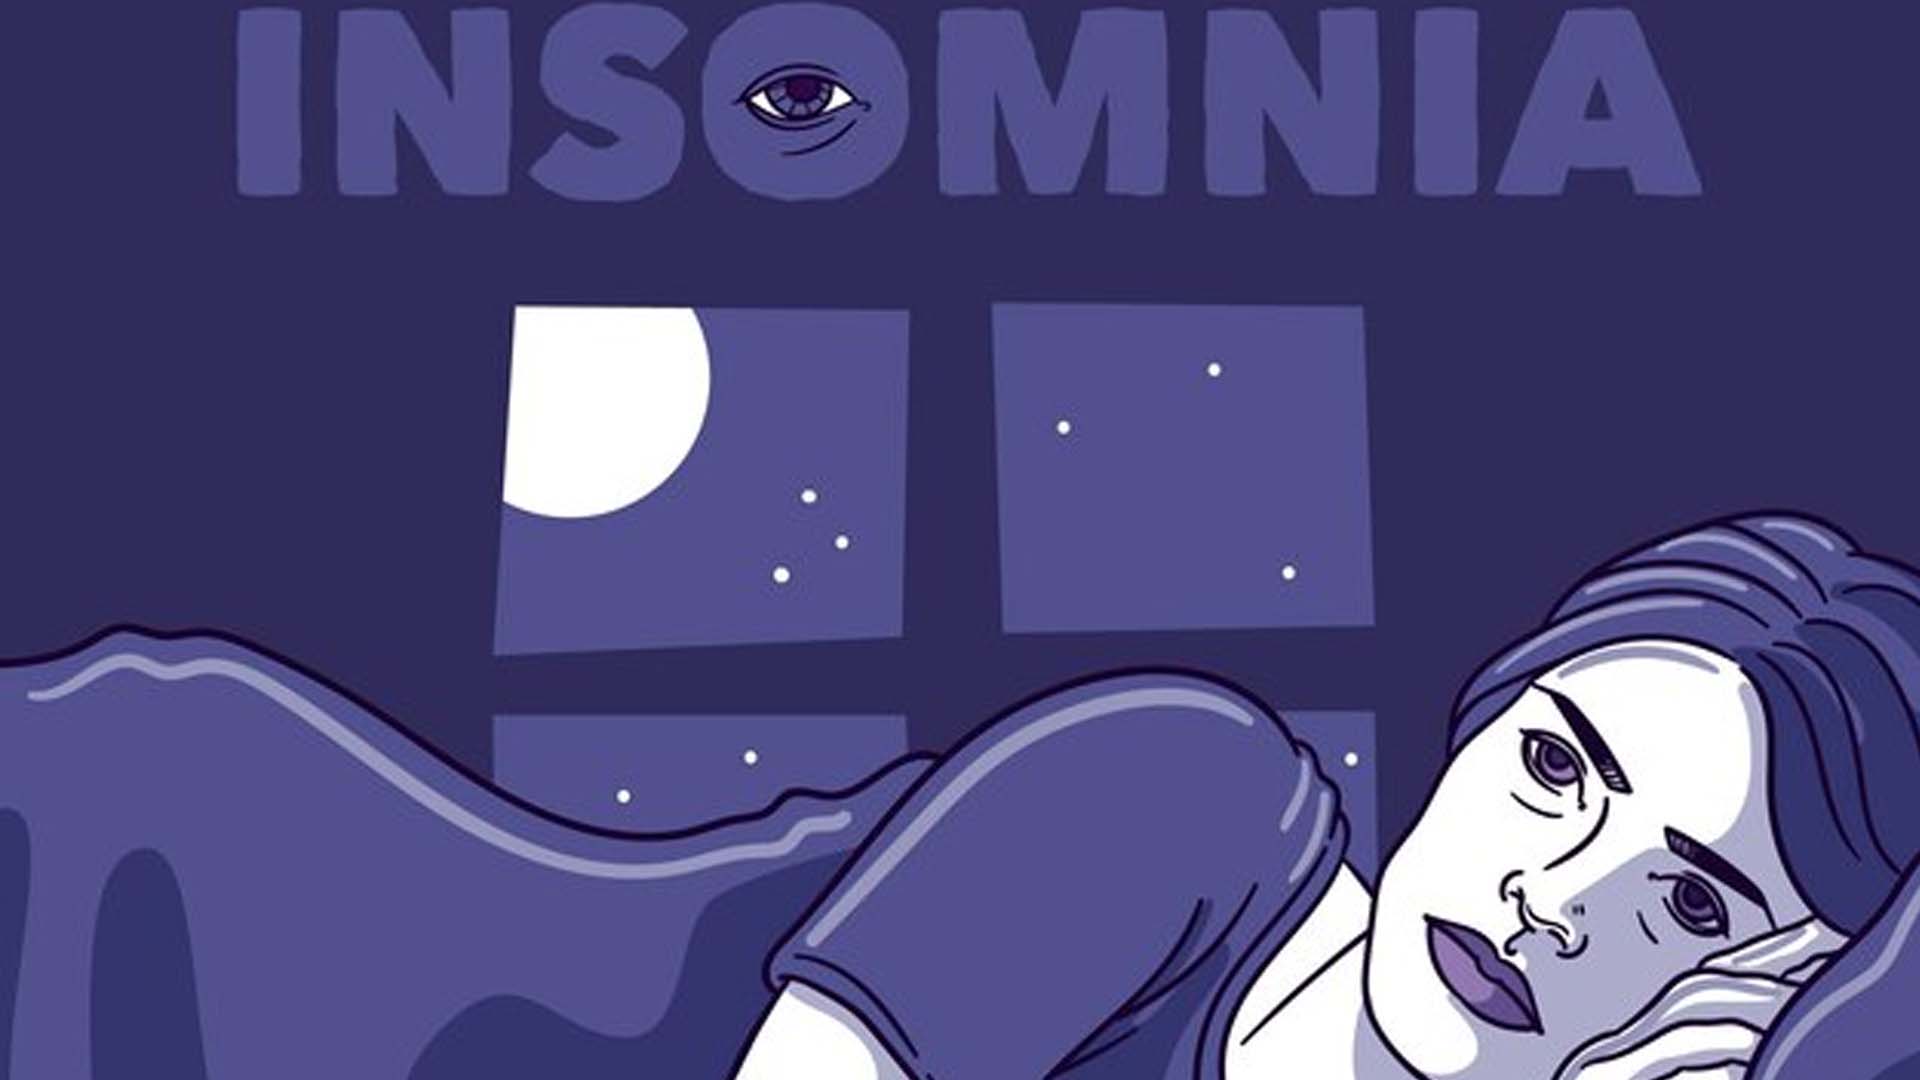 Insomnia, or difficulty falling asleep or staying asleep